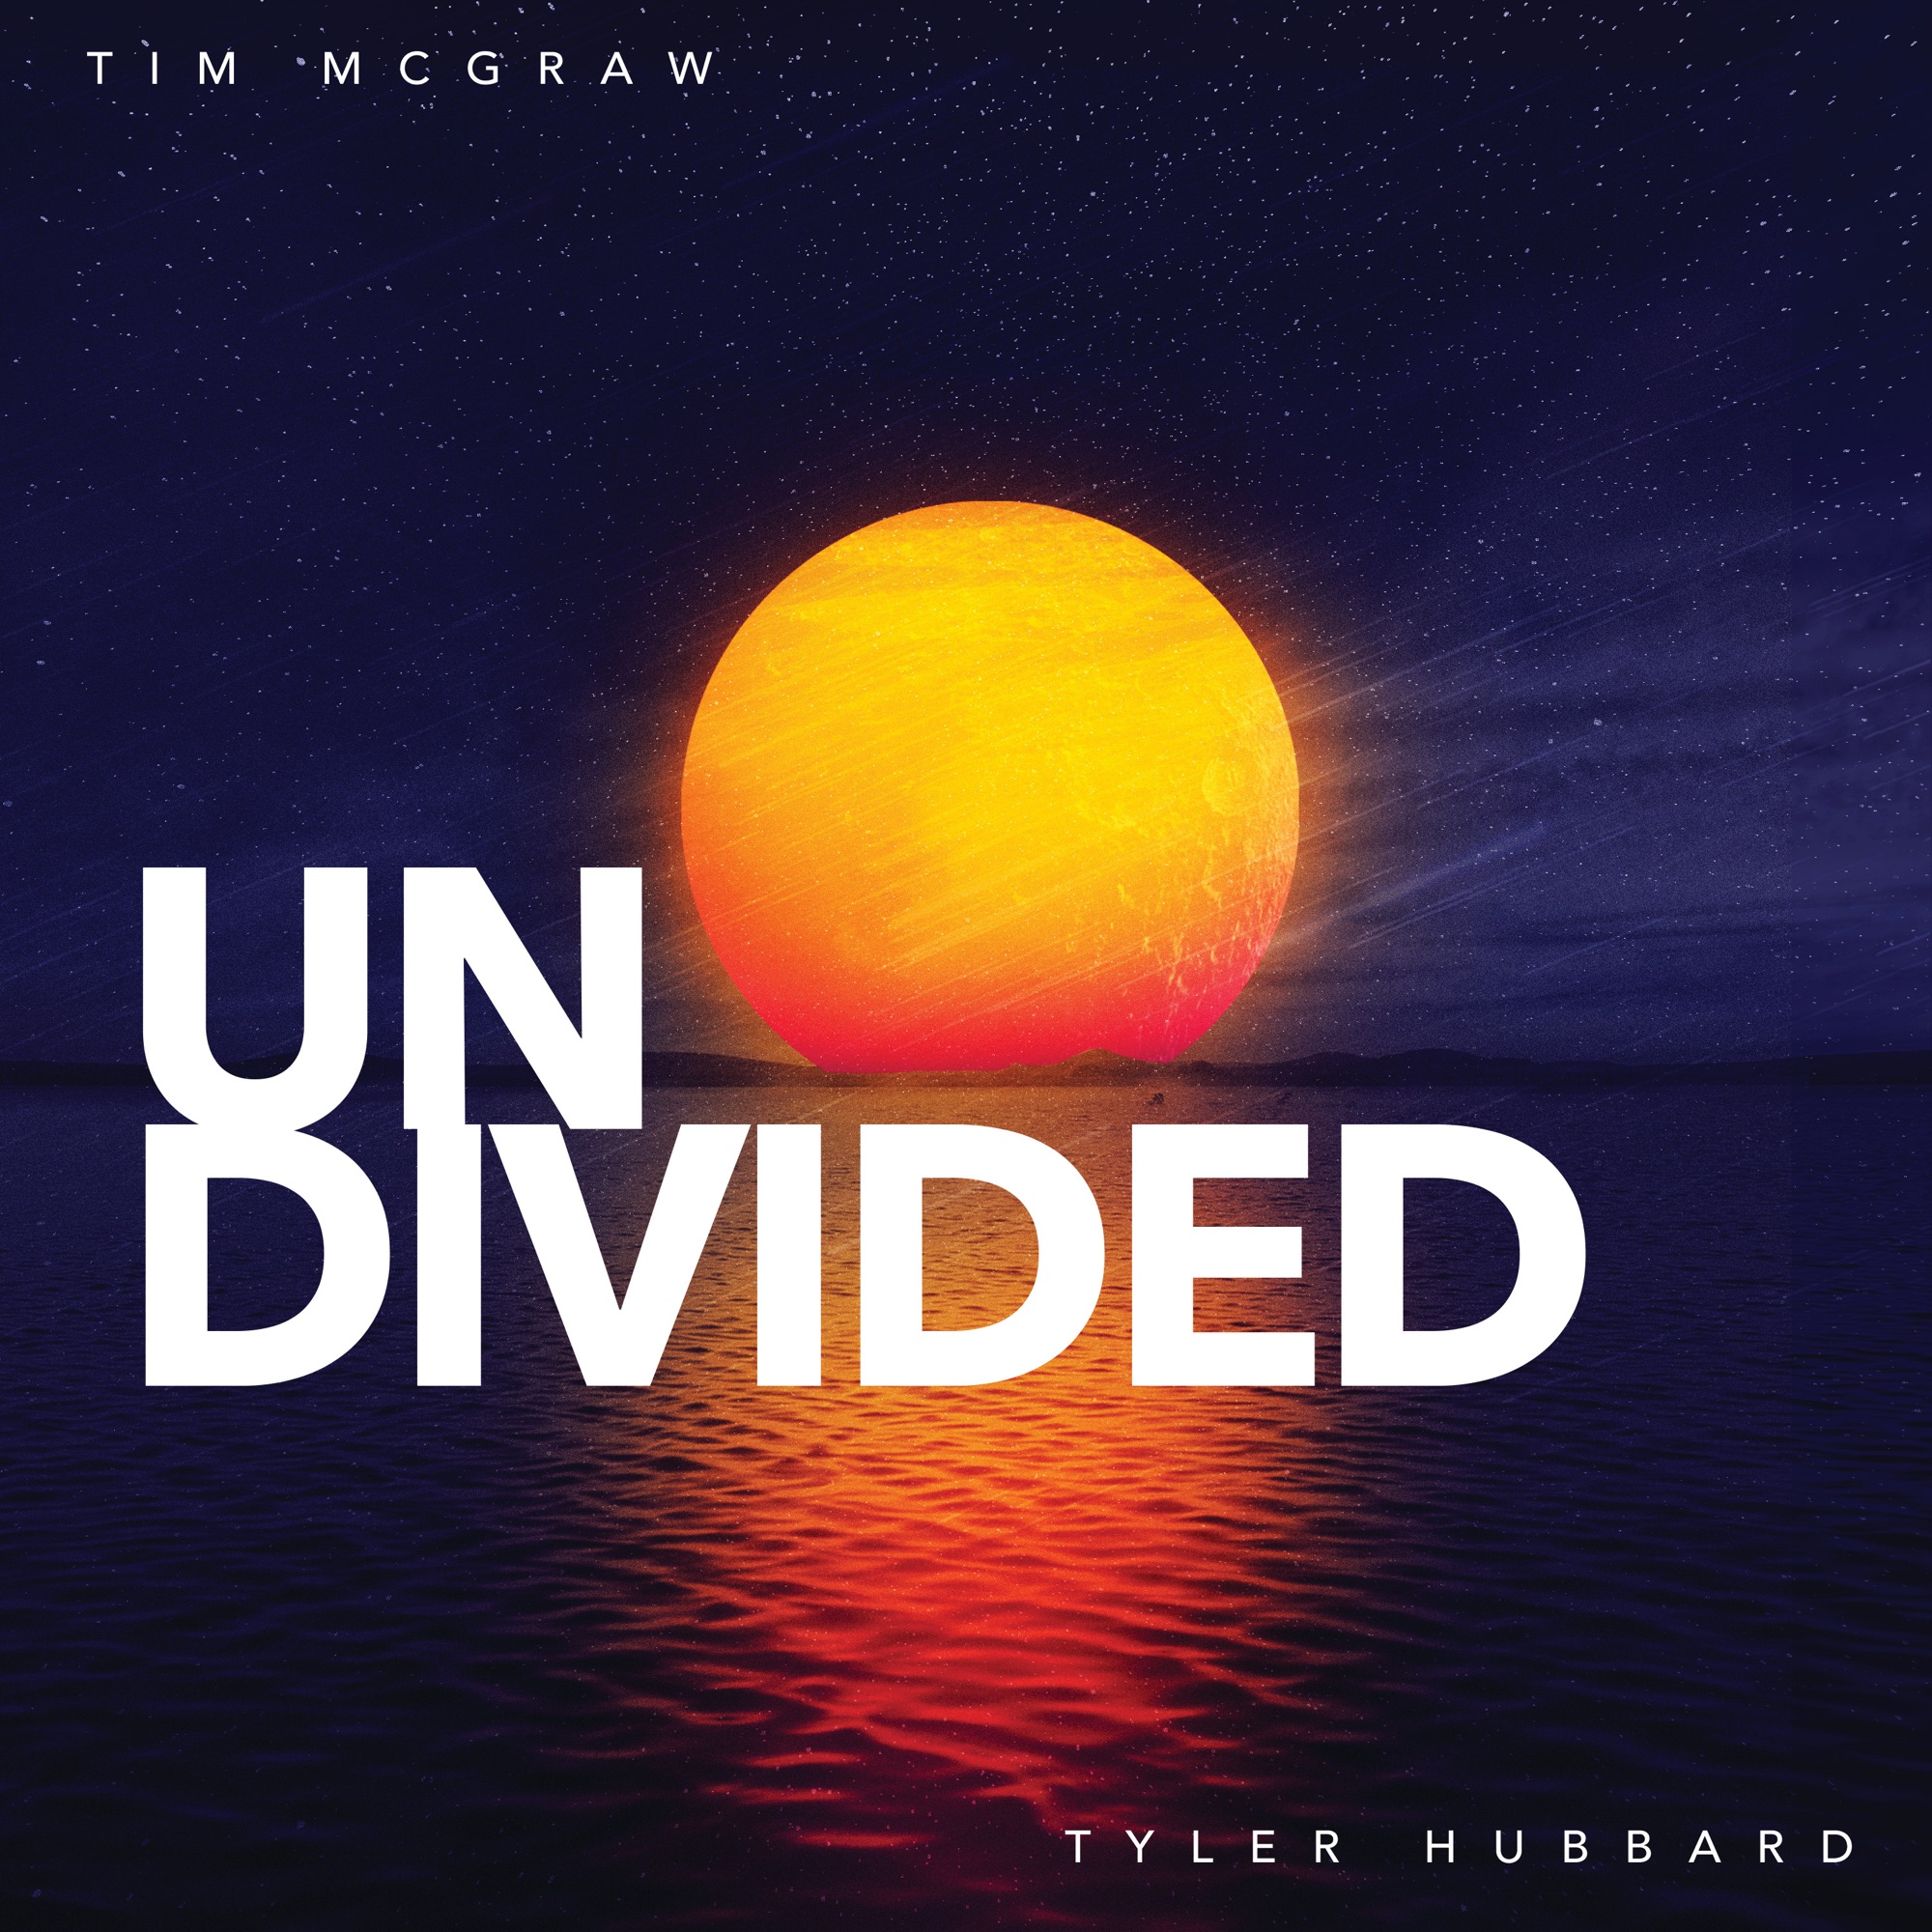 Tim McGraw & Tyler Hubbard - Undivided - Single